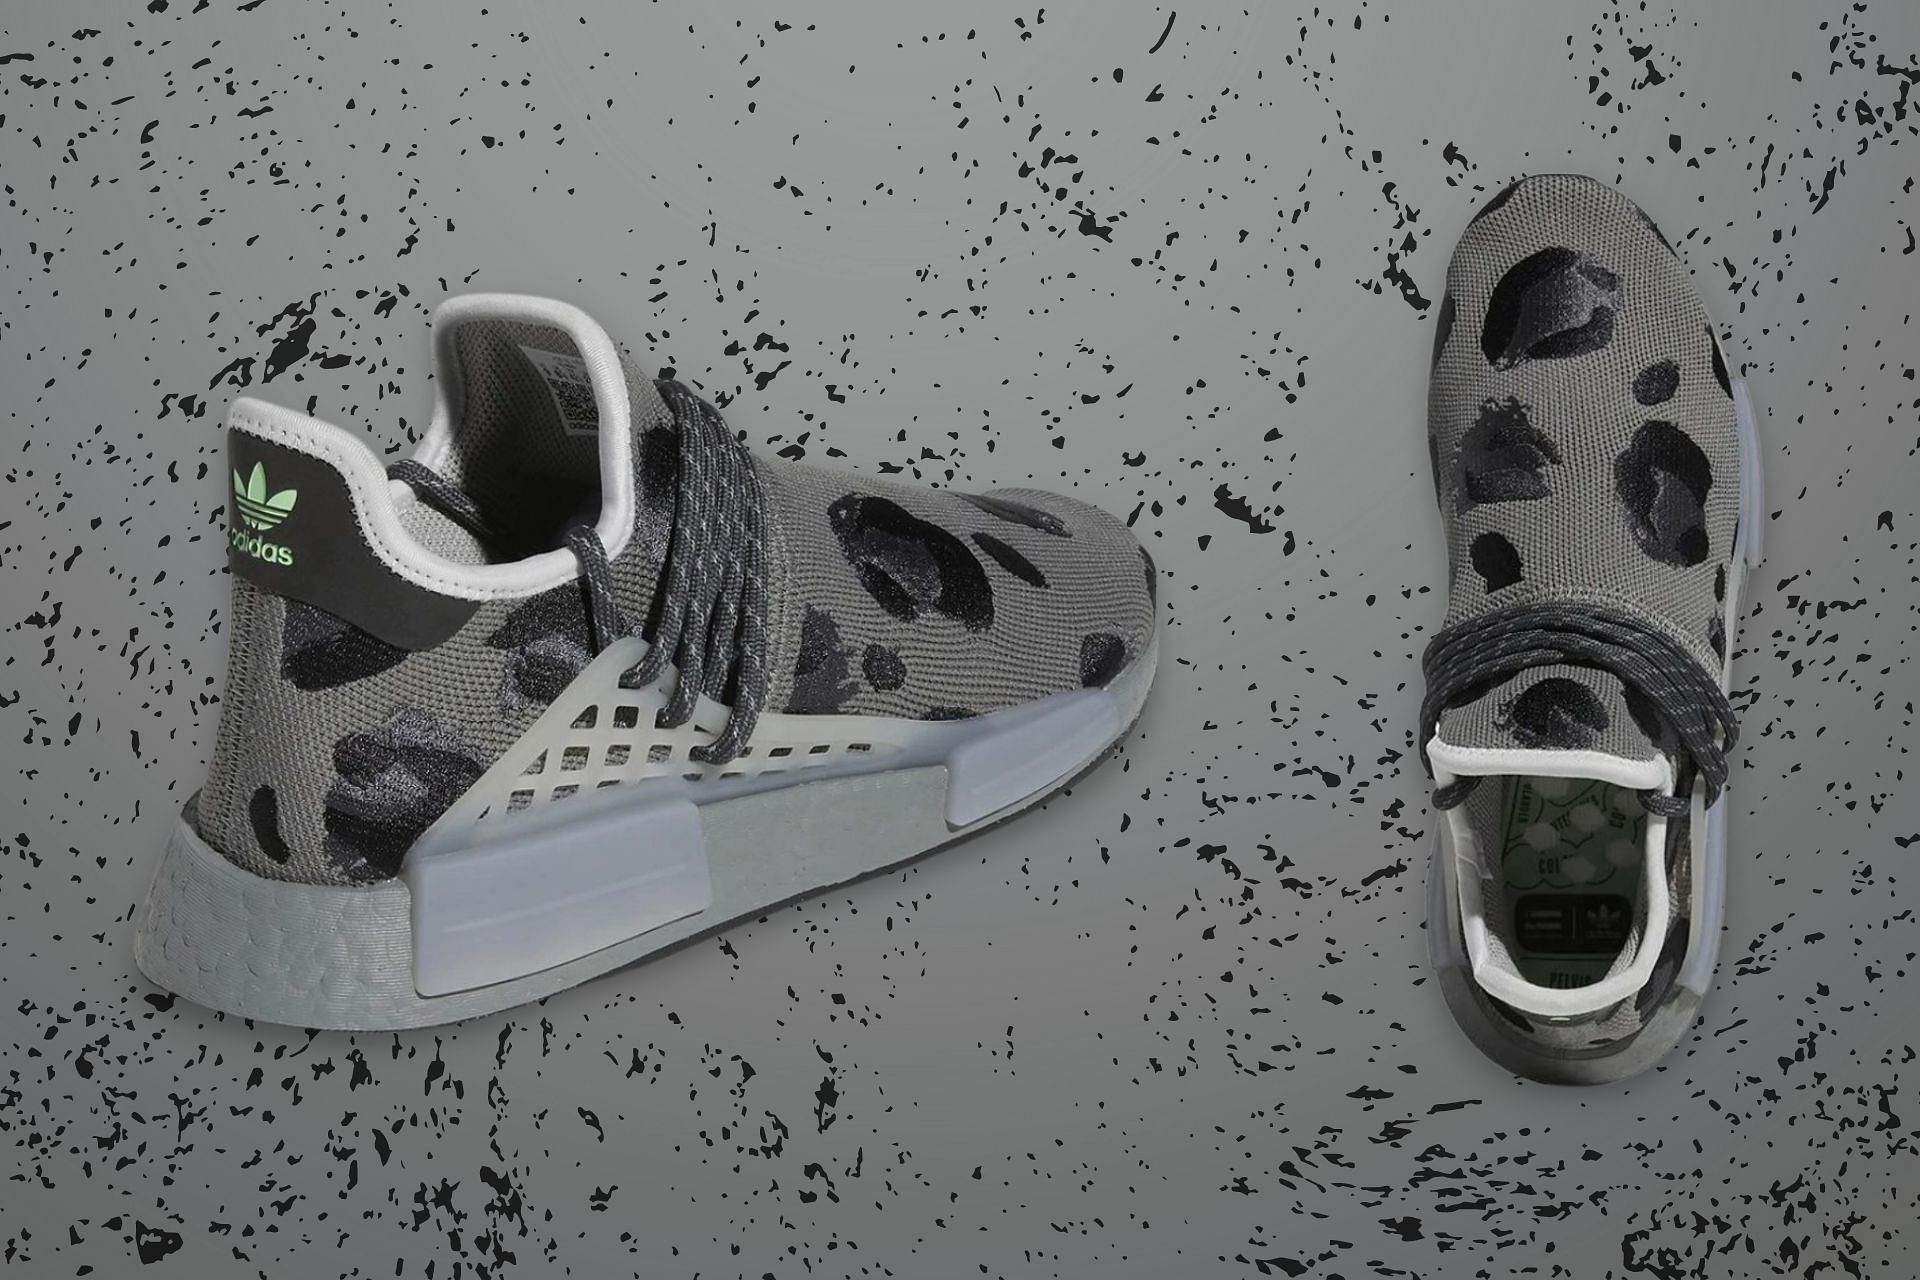 Take a closer look at the upcoming Pharrell Williams x Adidas Hu NMD Grey Animal Print shoes (Image via Sportskeeda)